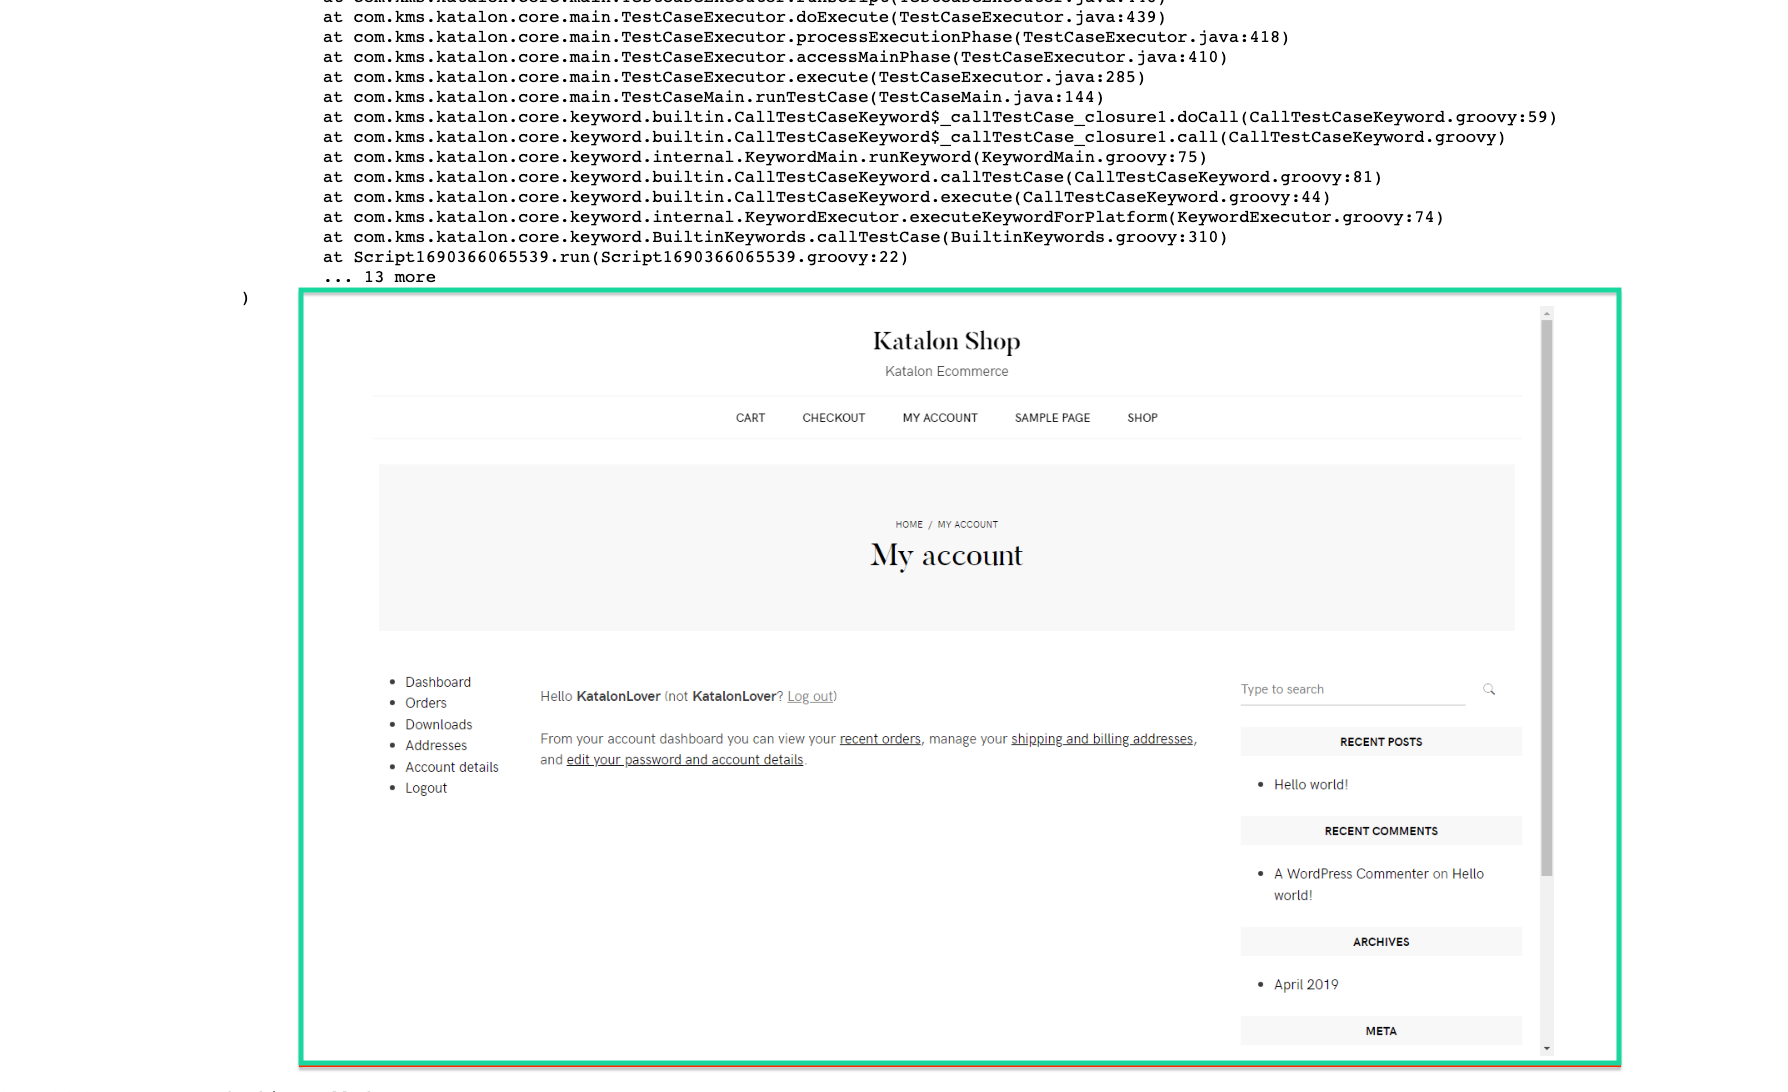 failed step screenshot - HTML report file